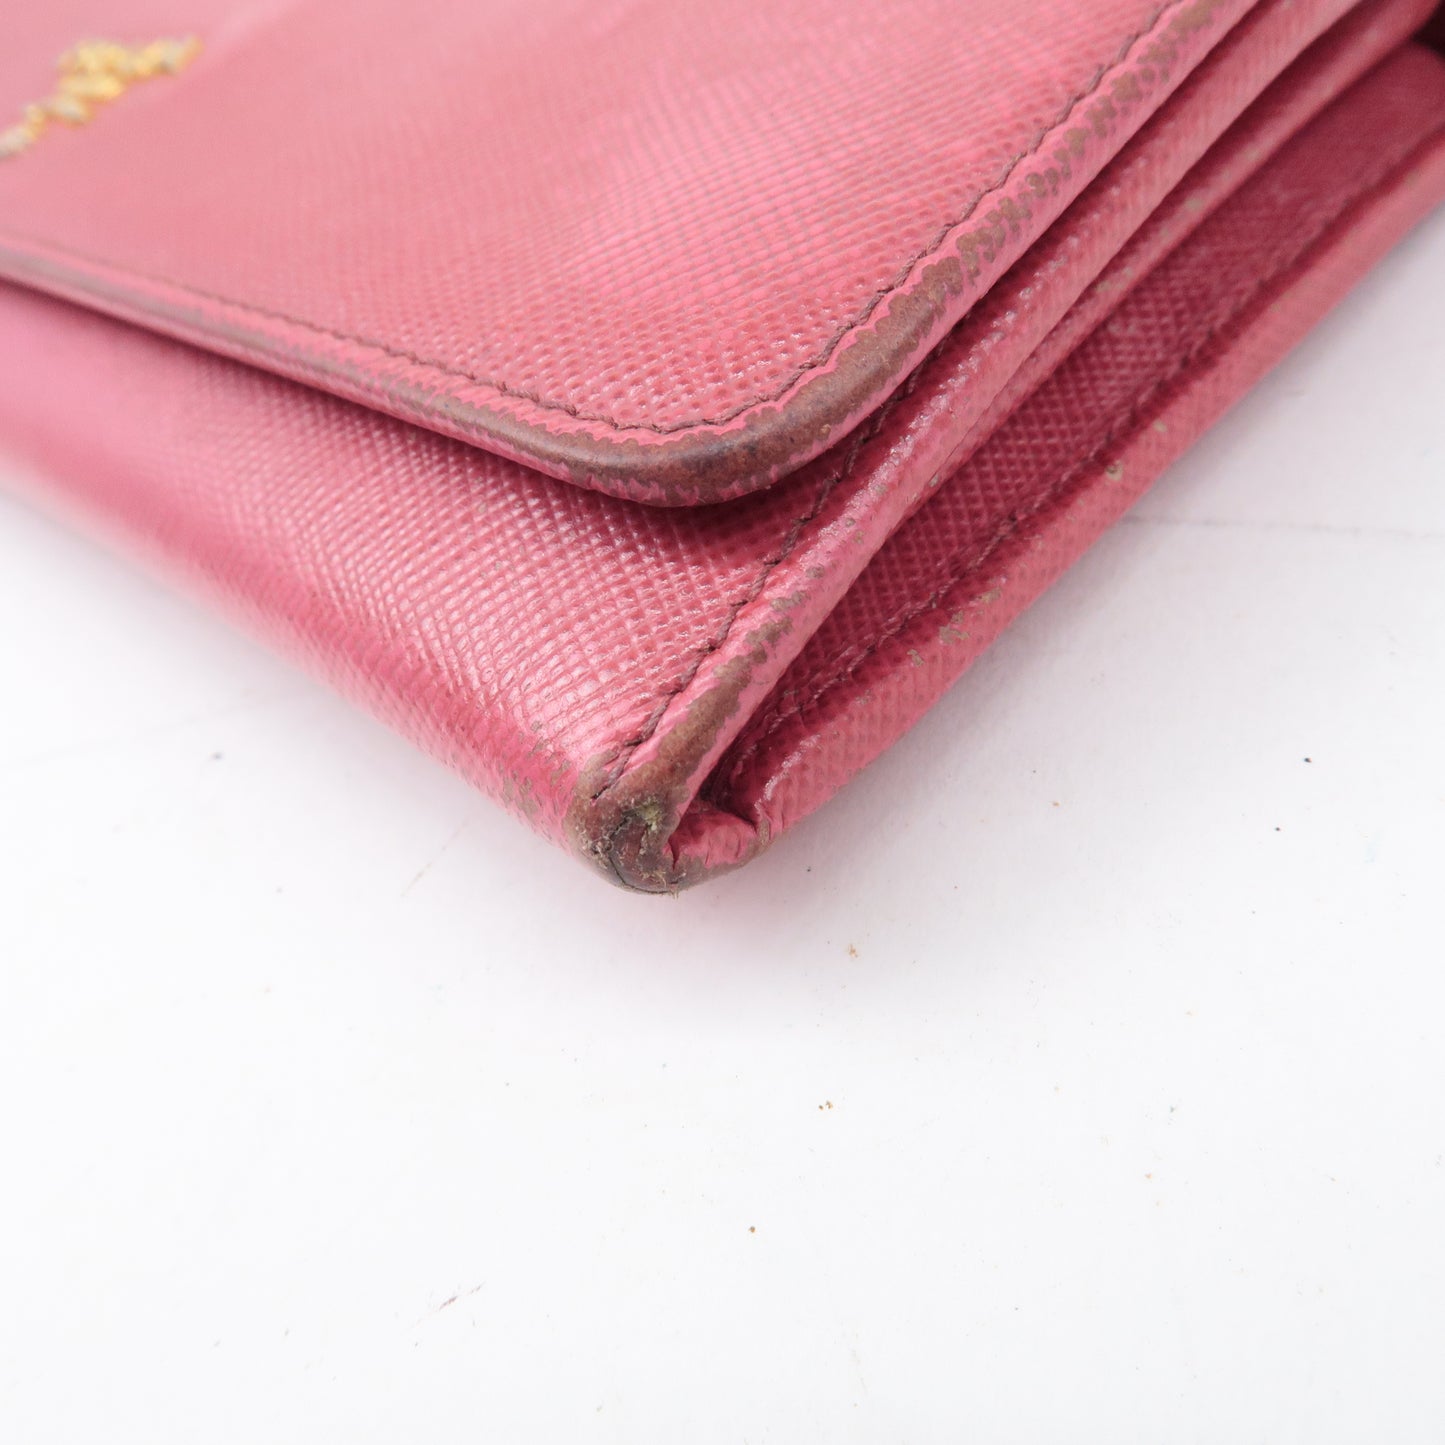 PRADA Saffiano Metal Chain Wallet Pink 1M1290